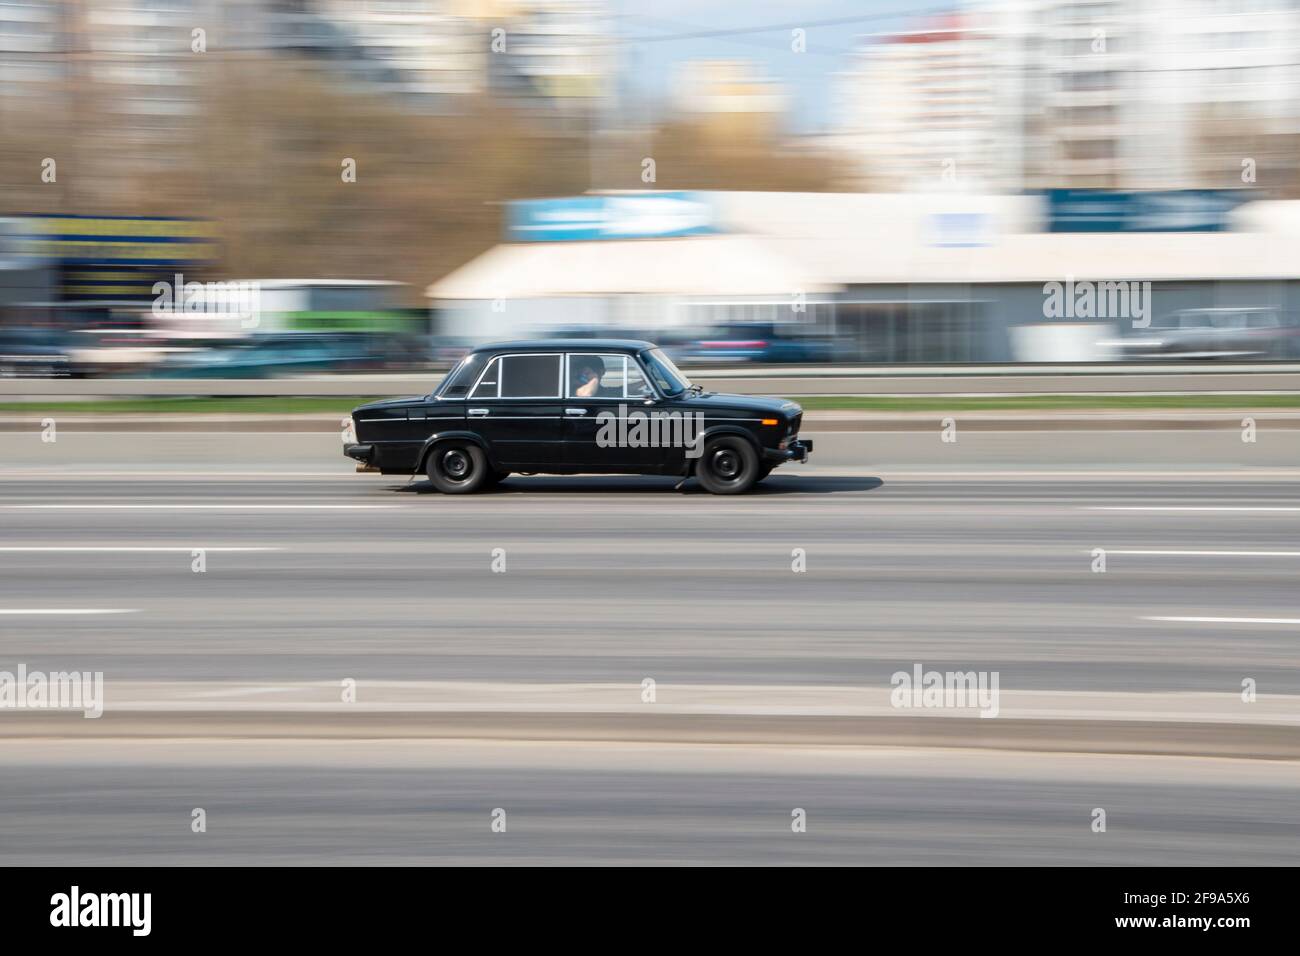 Ukraine, Kyiv - 4 April 2021: Black LADA 2106 car moving on the street. Editorial Stock Photo